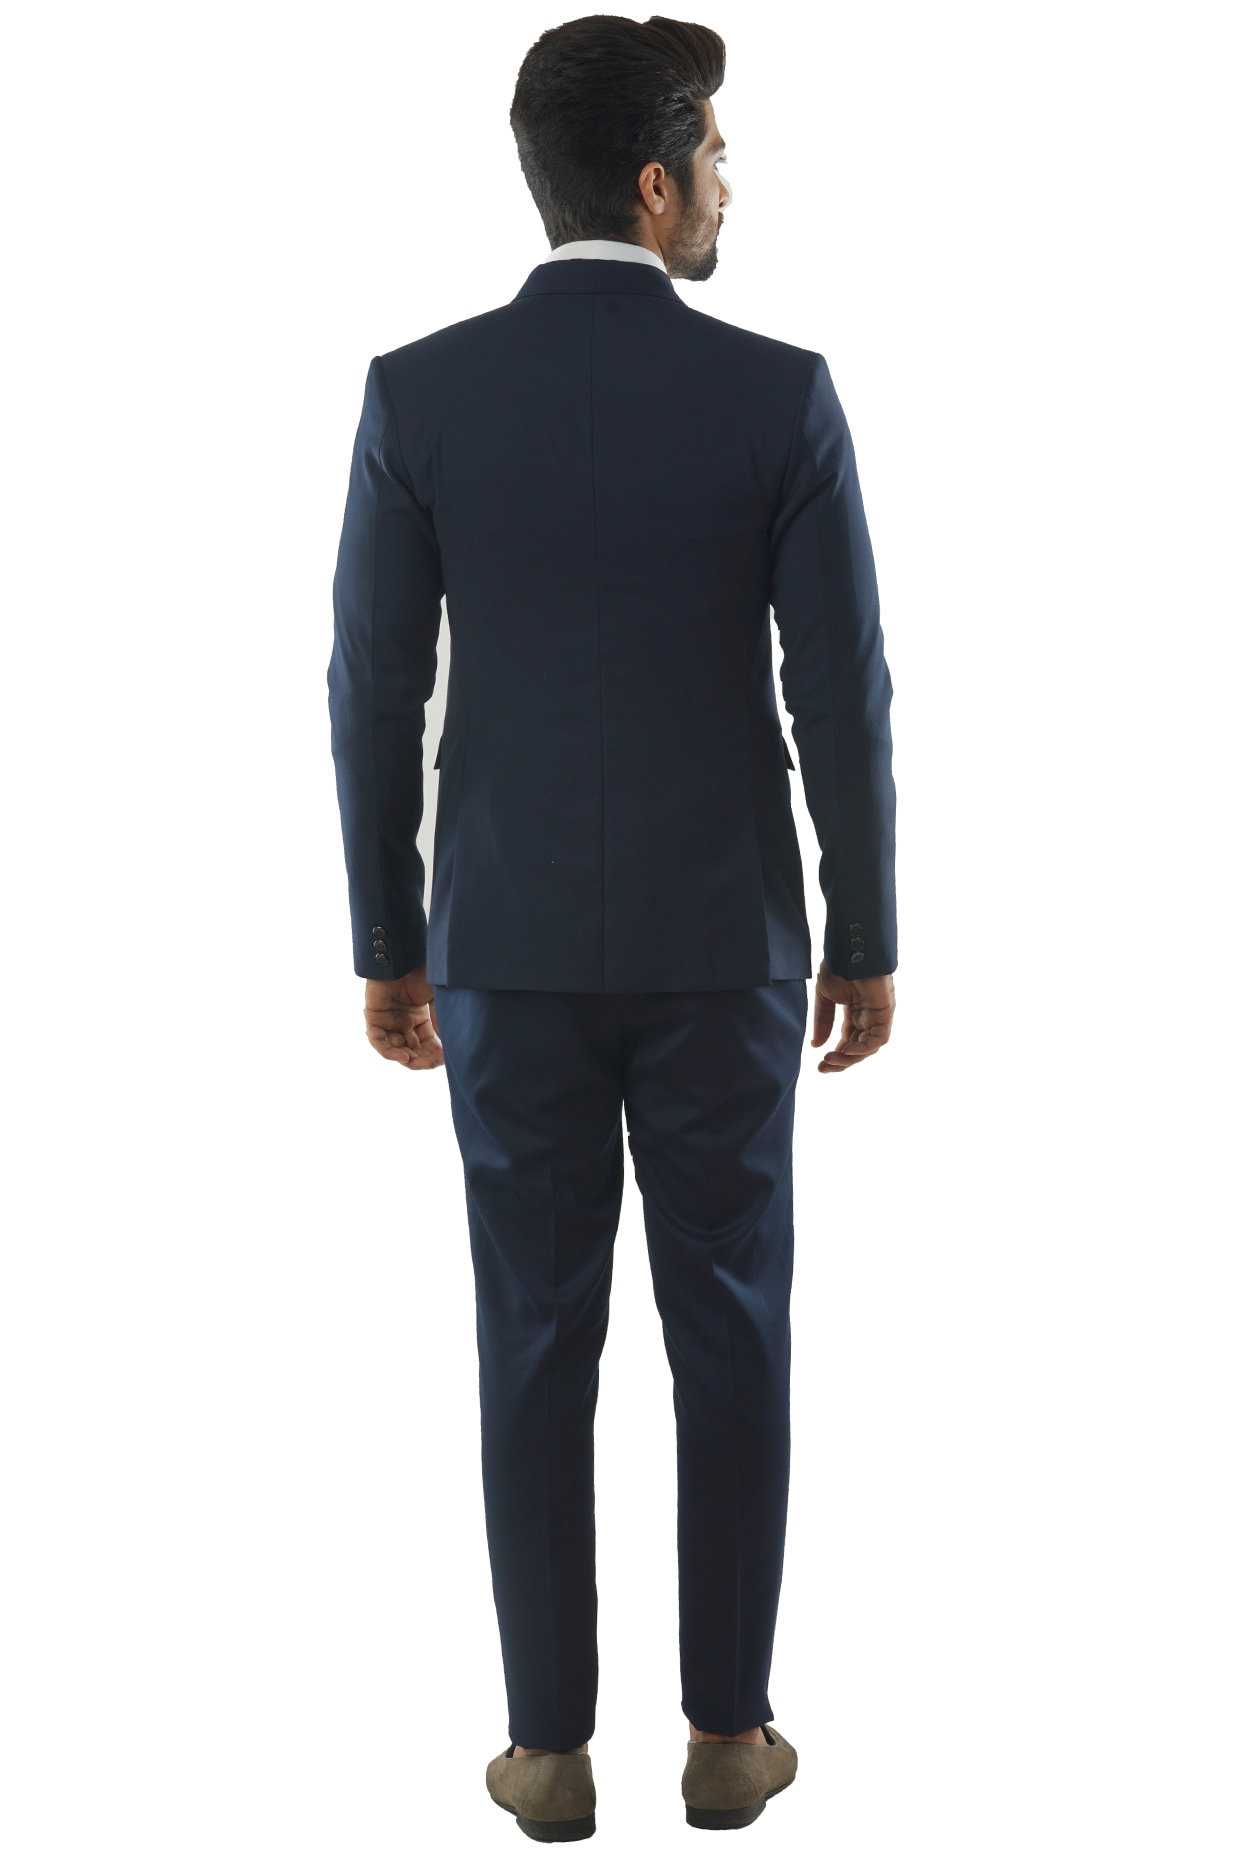 BAJAJ'S School Uniform Navy Blue Pant TERRYCOT | School Pant | School Pant  Navy Blue Colour for Boys | School Trousers | School Uniform Pants for BOY  (30W X 42L) : Amazon.in: Fashion